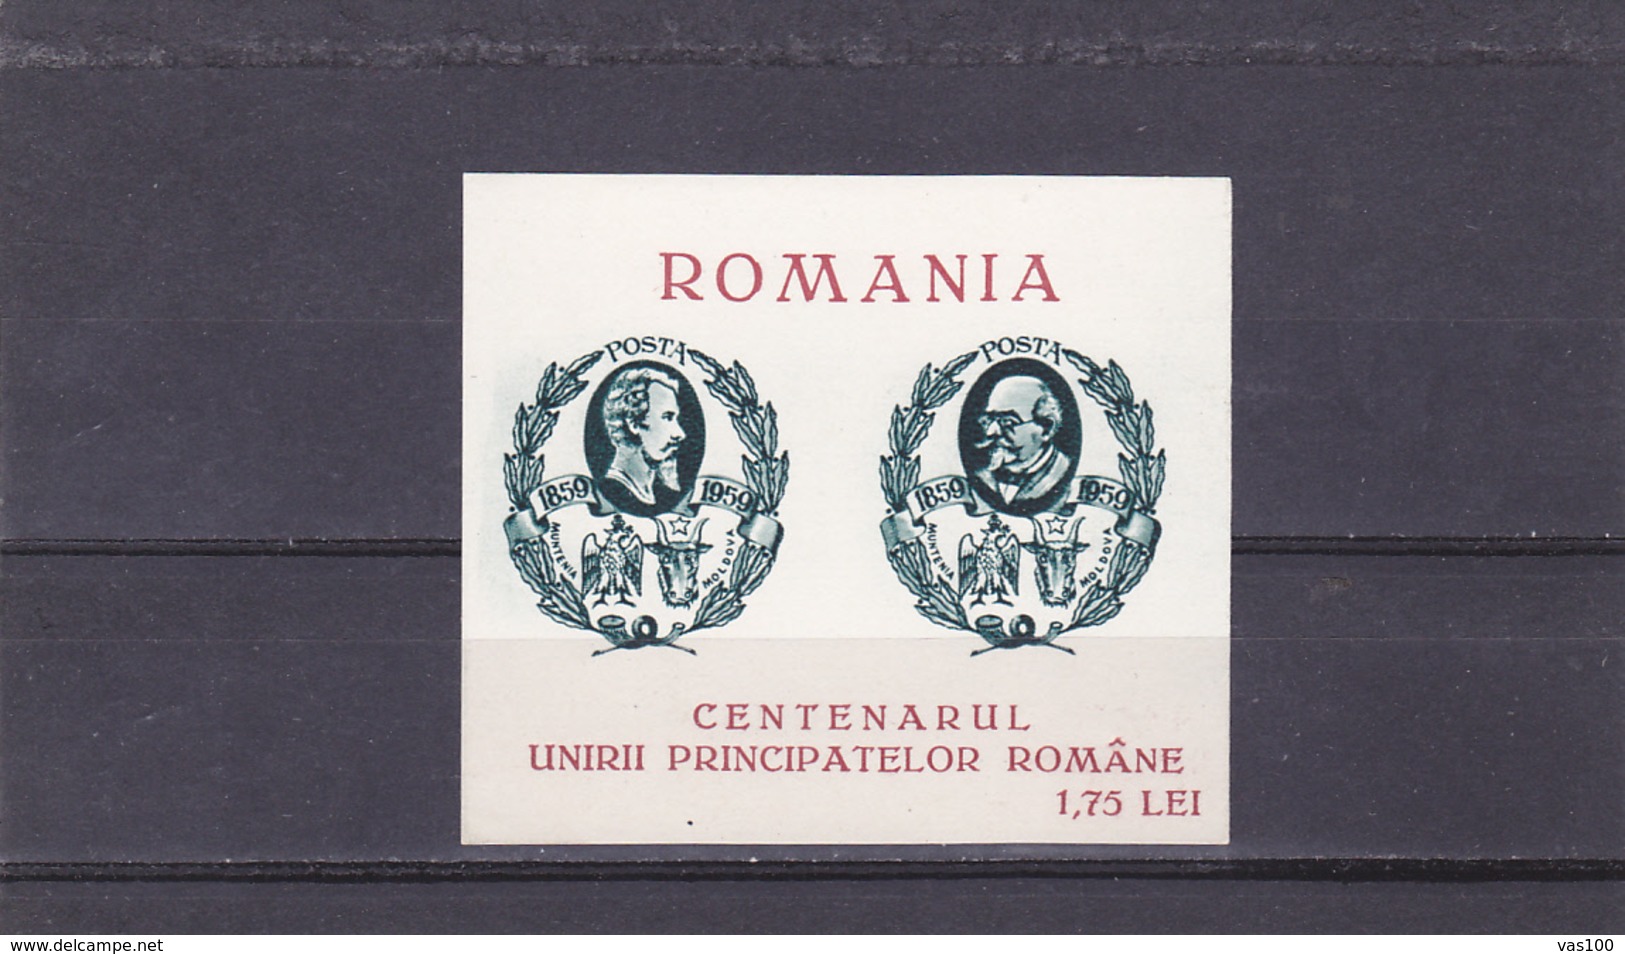 SPAIN - EXILE CENTENARUL UNIRII PRINCIPATELOR ROMANE,1959 BLOCK MNH,ROMANIA. - Local Post Stamps